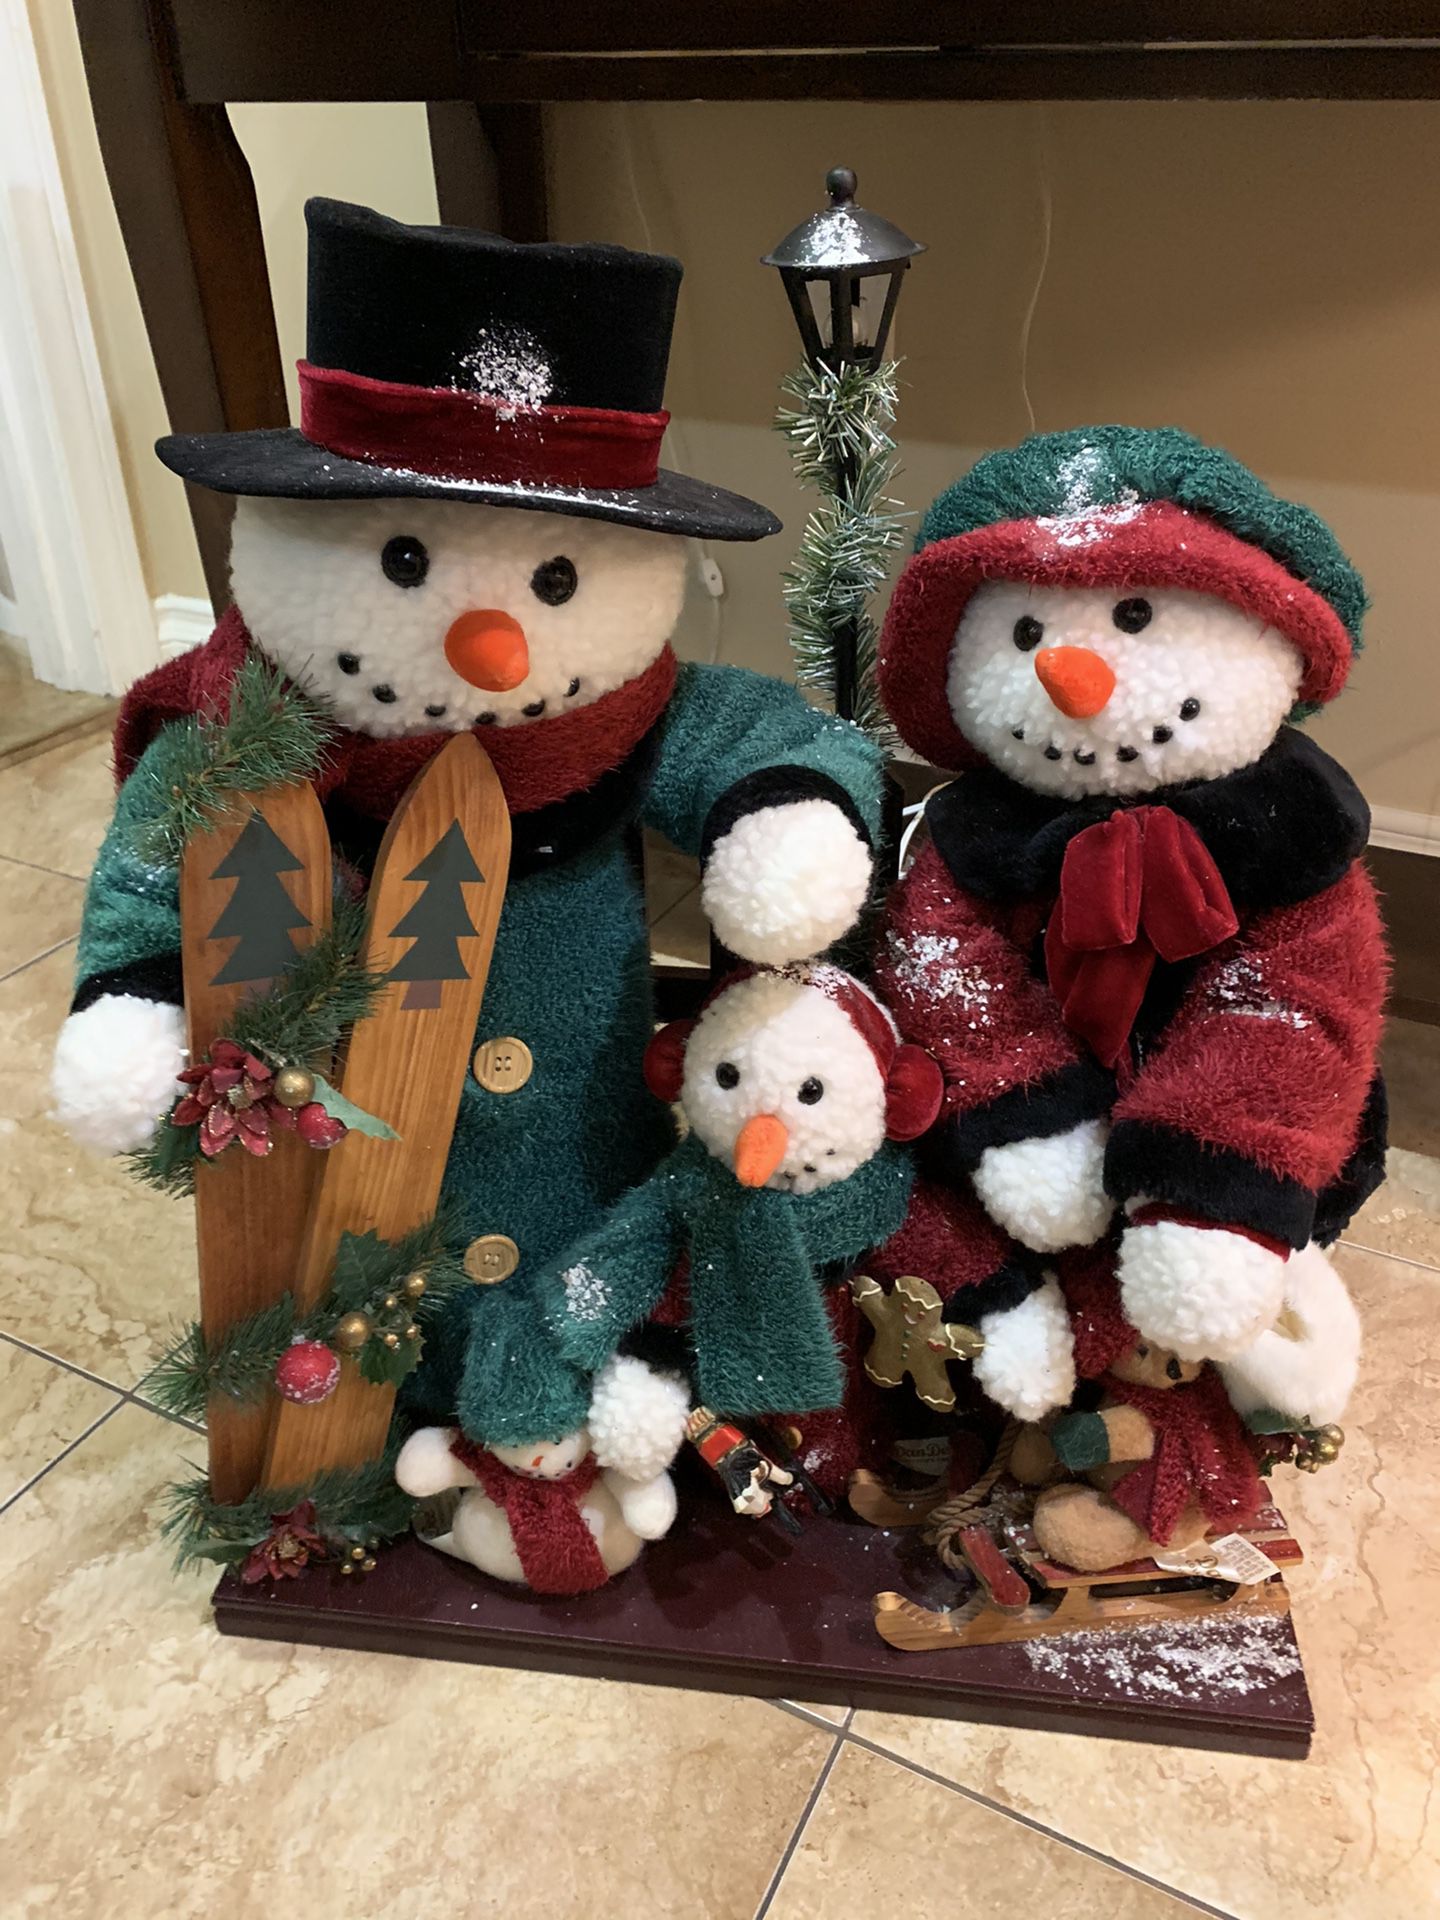 Christmas snowman family